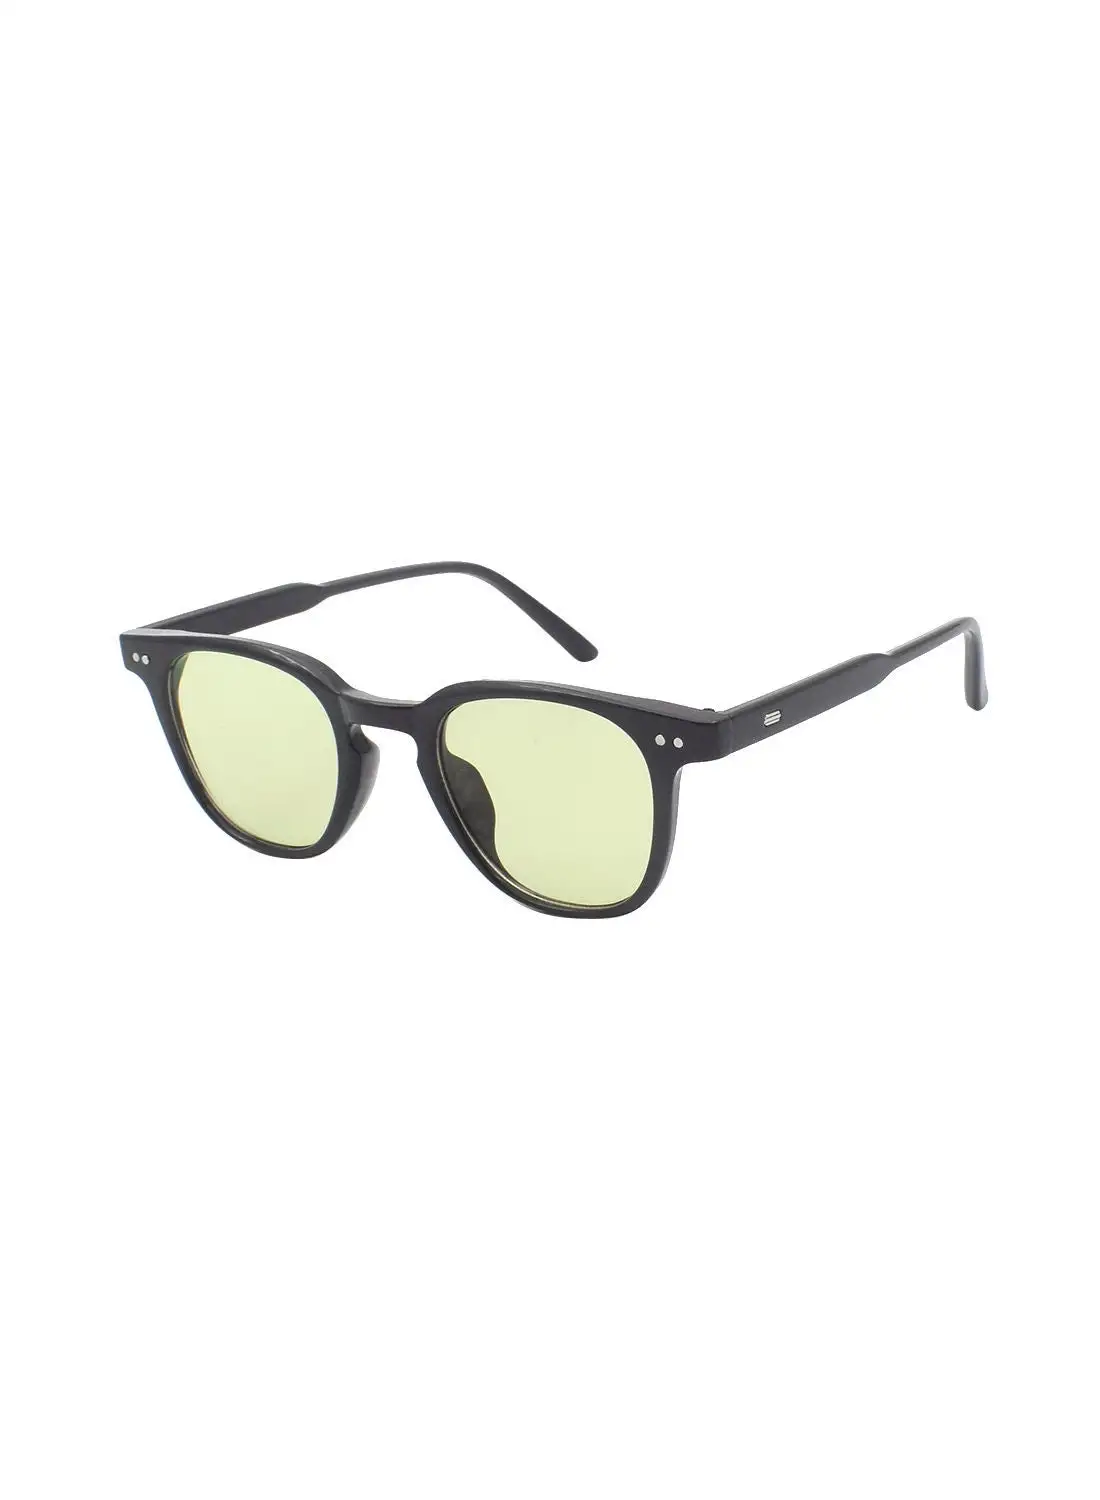 MADEYES Square Sunglasses EE20X068-3